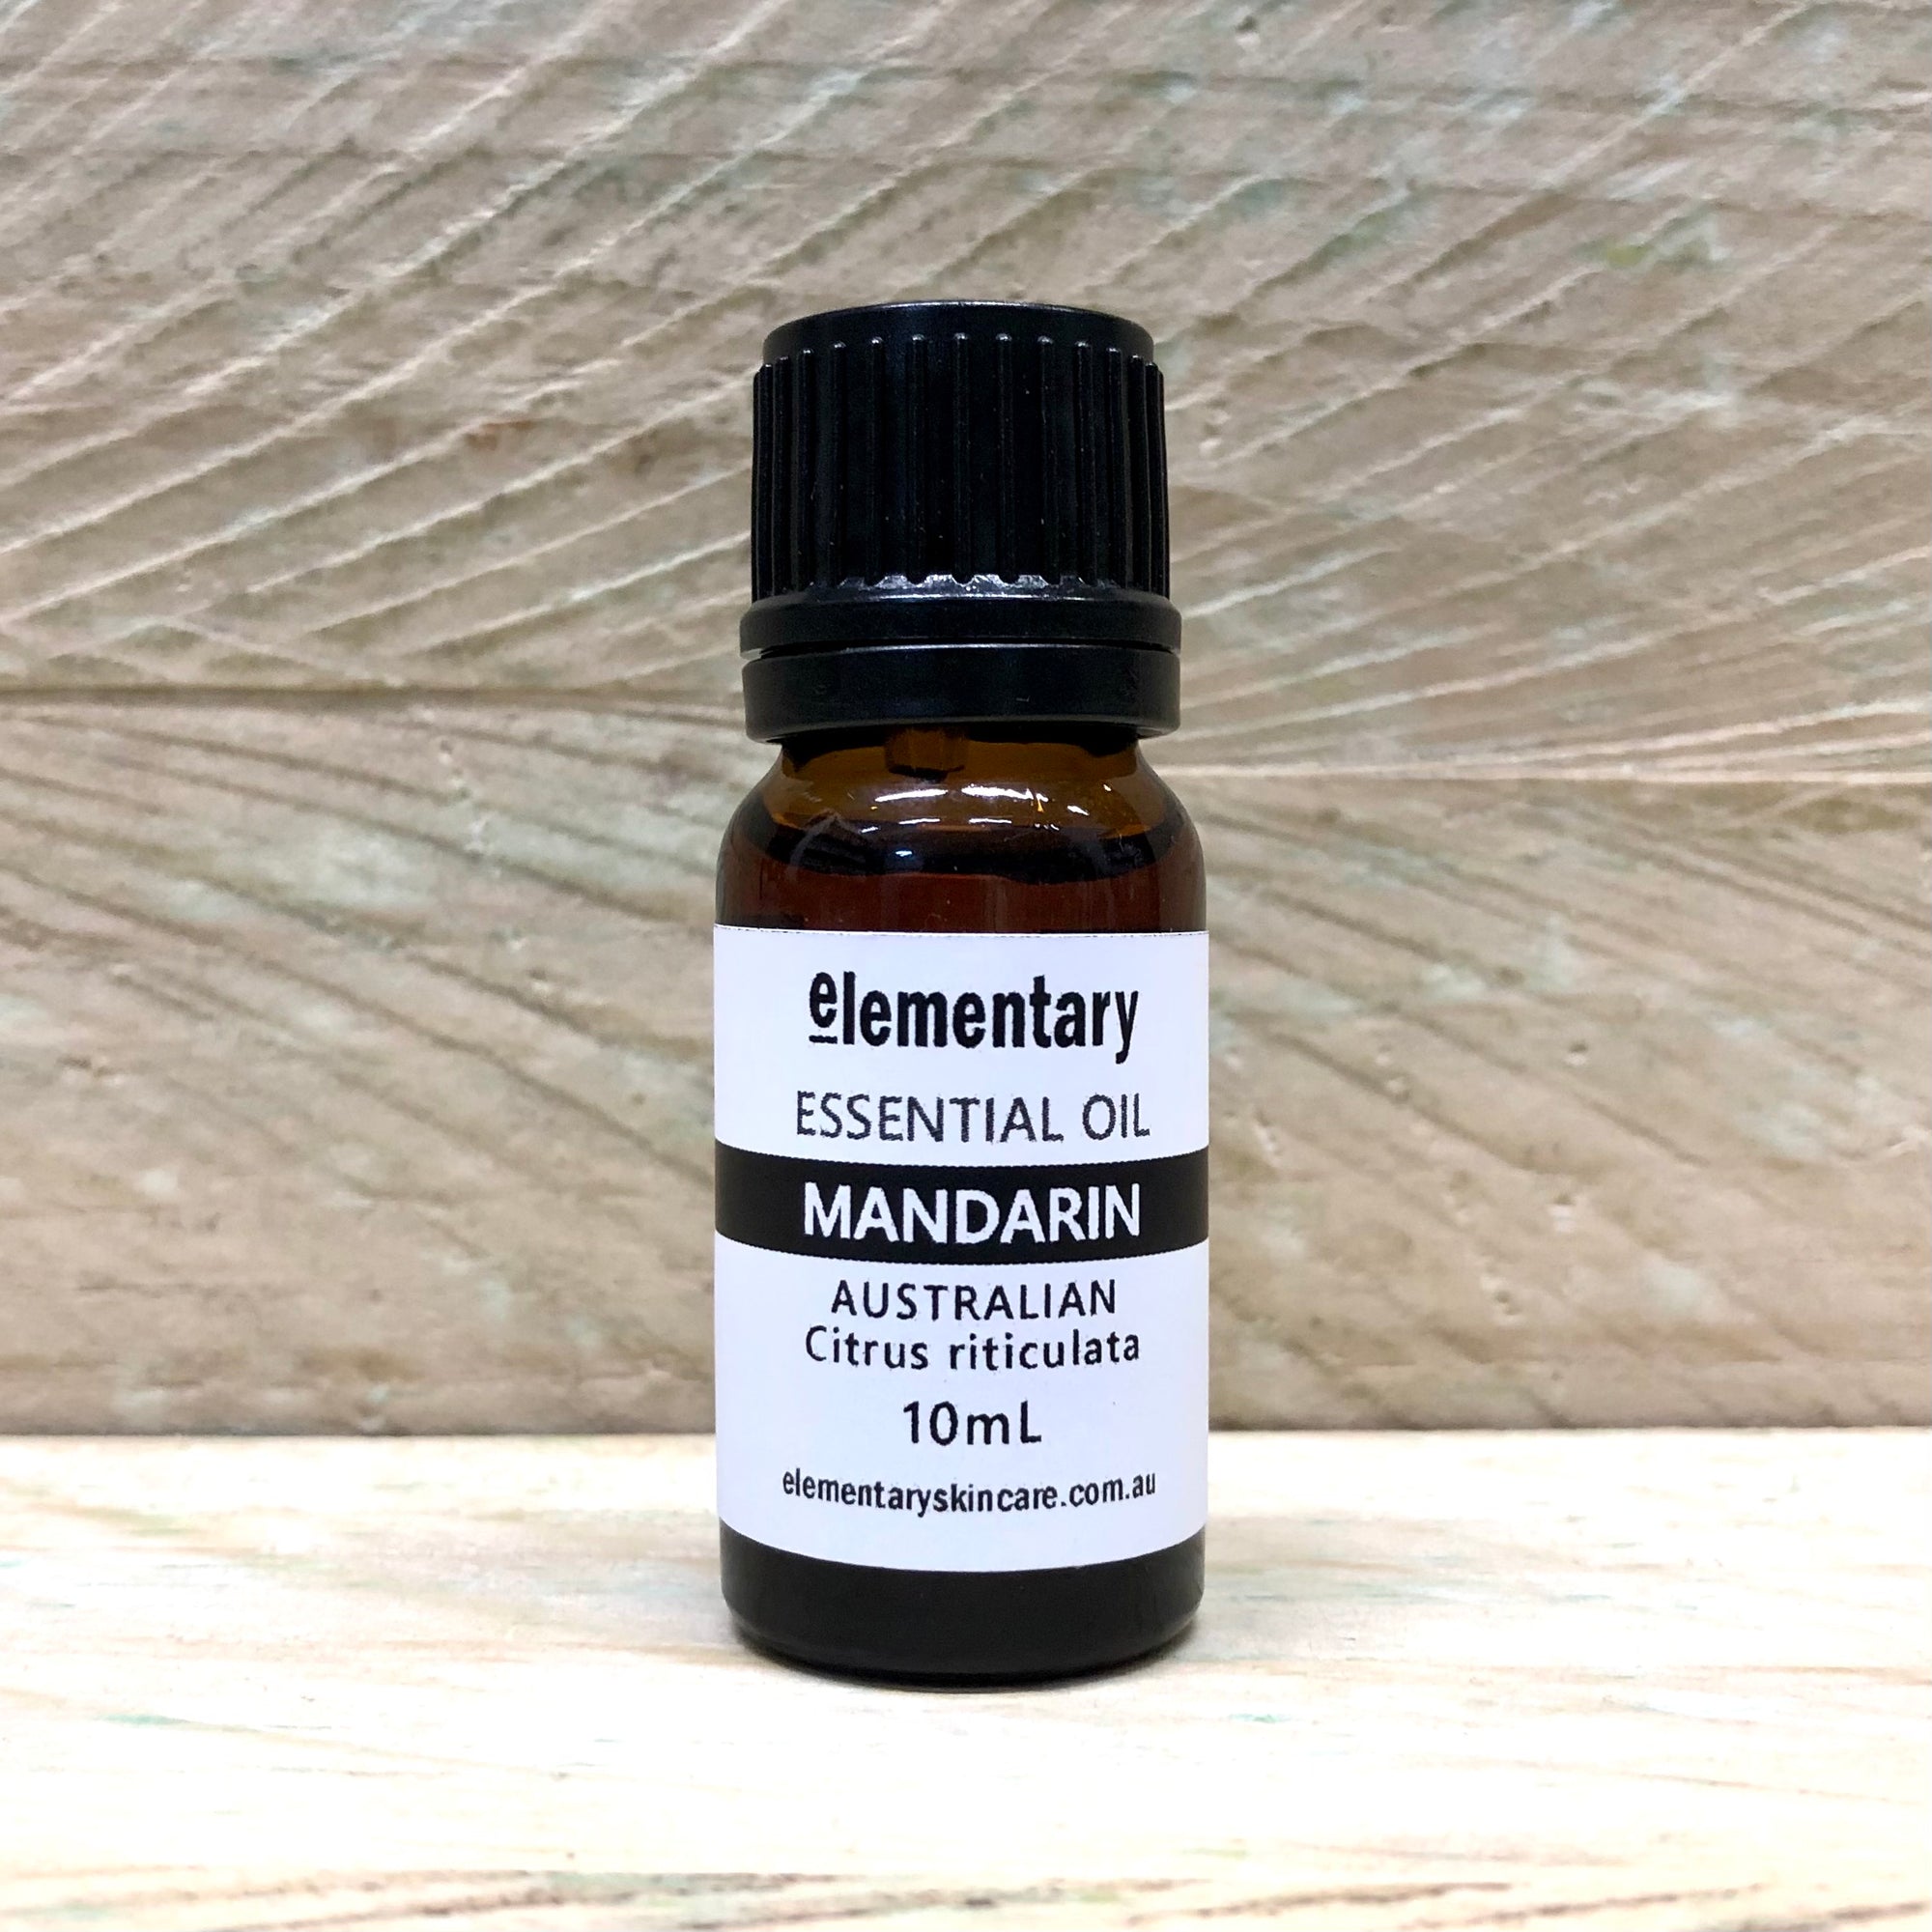 Elementary essential oil Australian Mandarin